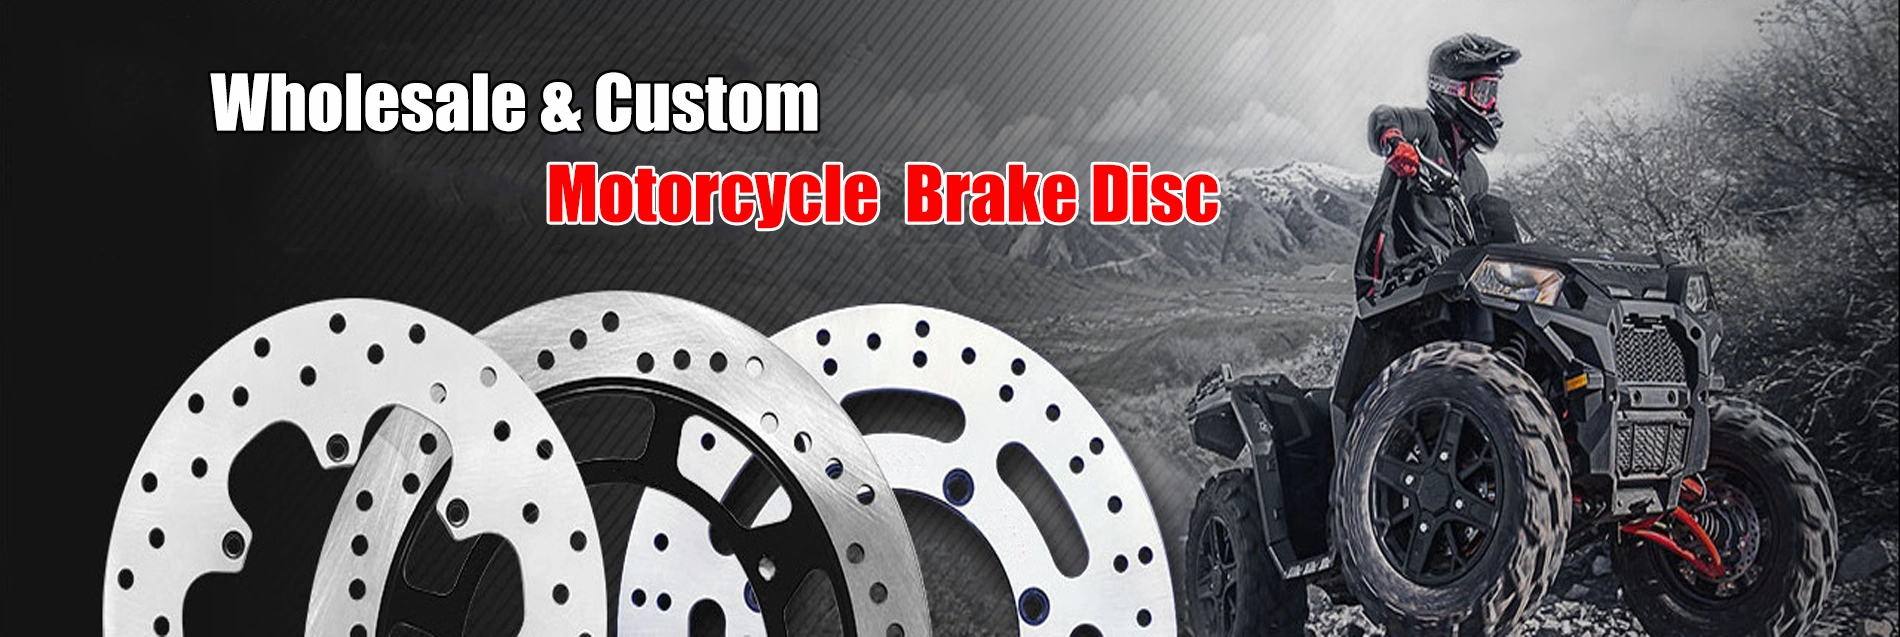 Front 282mm motorcycle brake disc